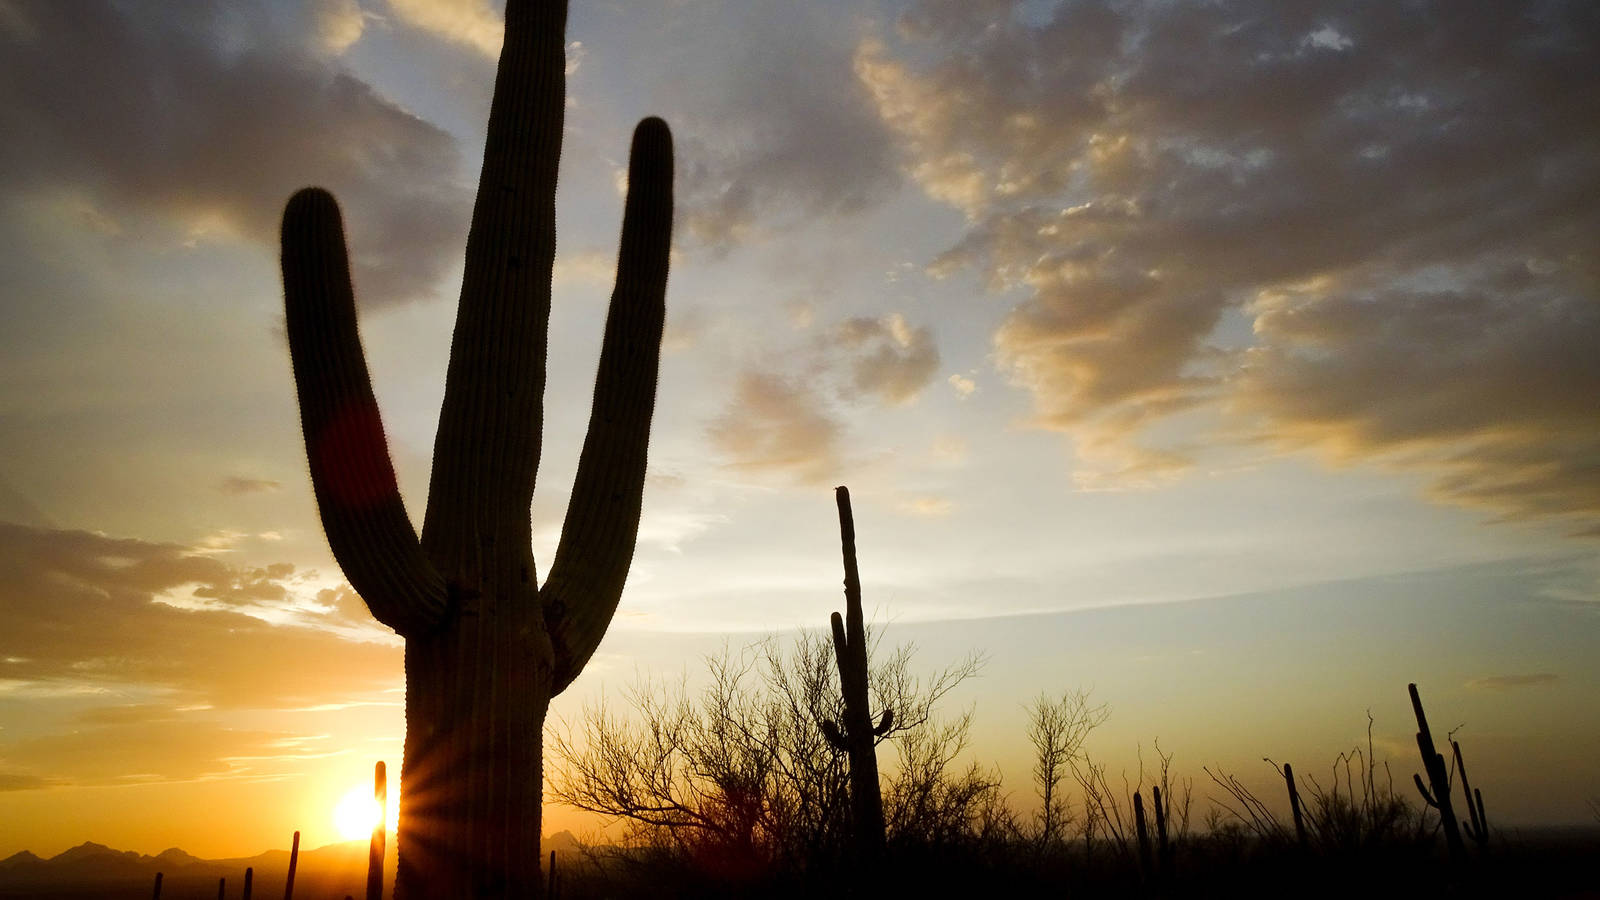 Saguaro cactuses are under threat because of climate change - Washington  Post